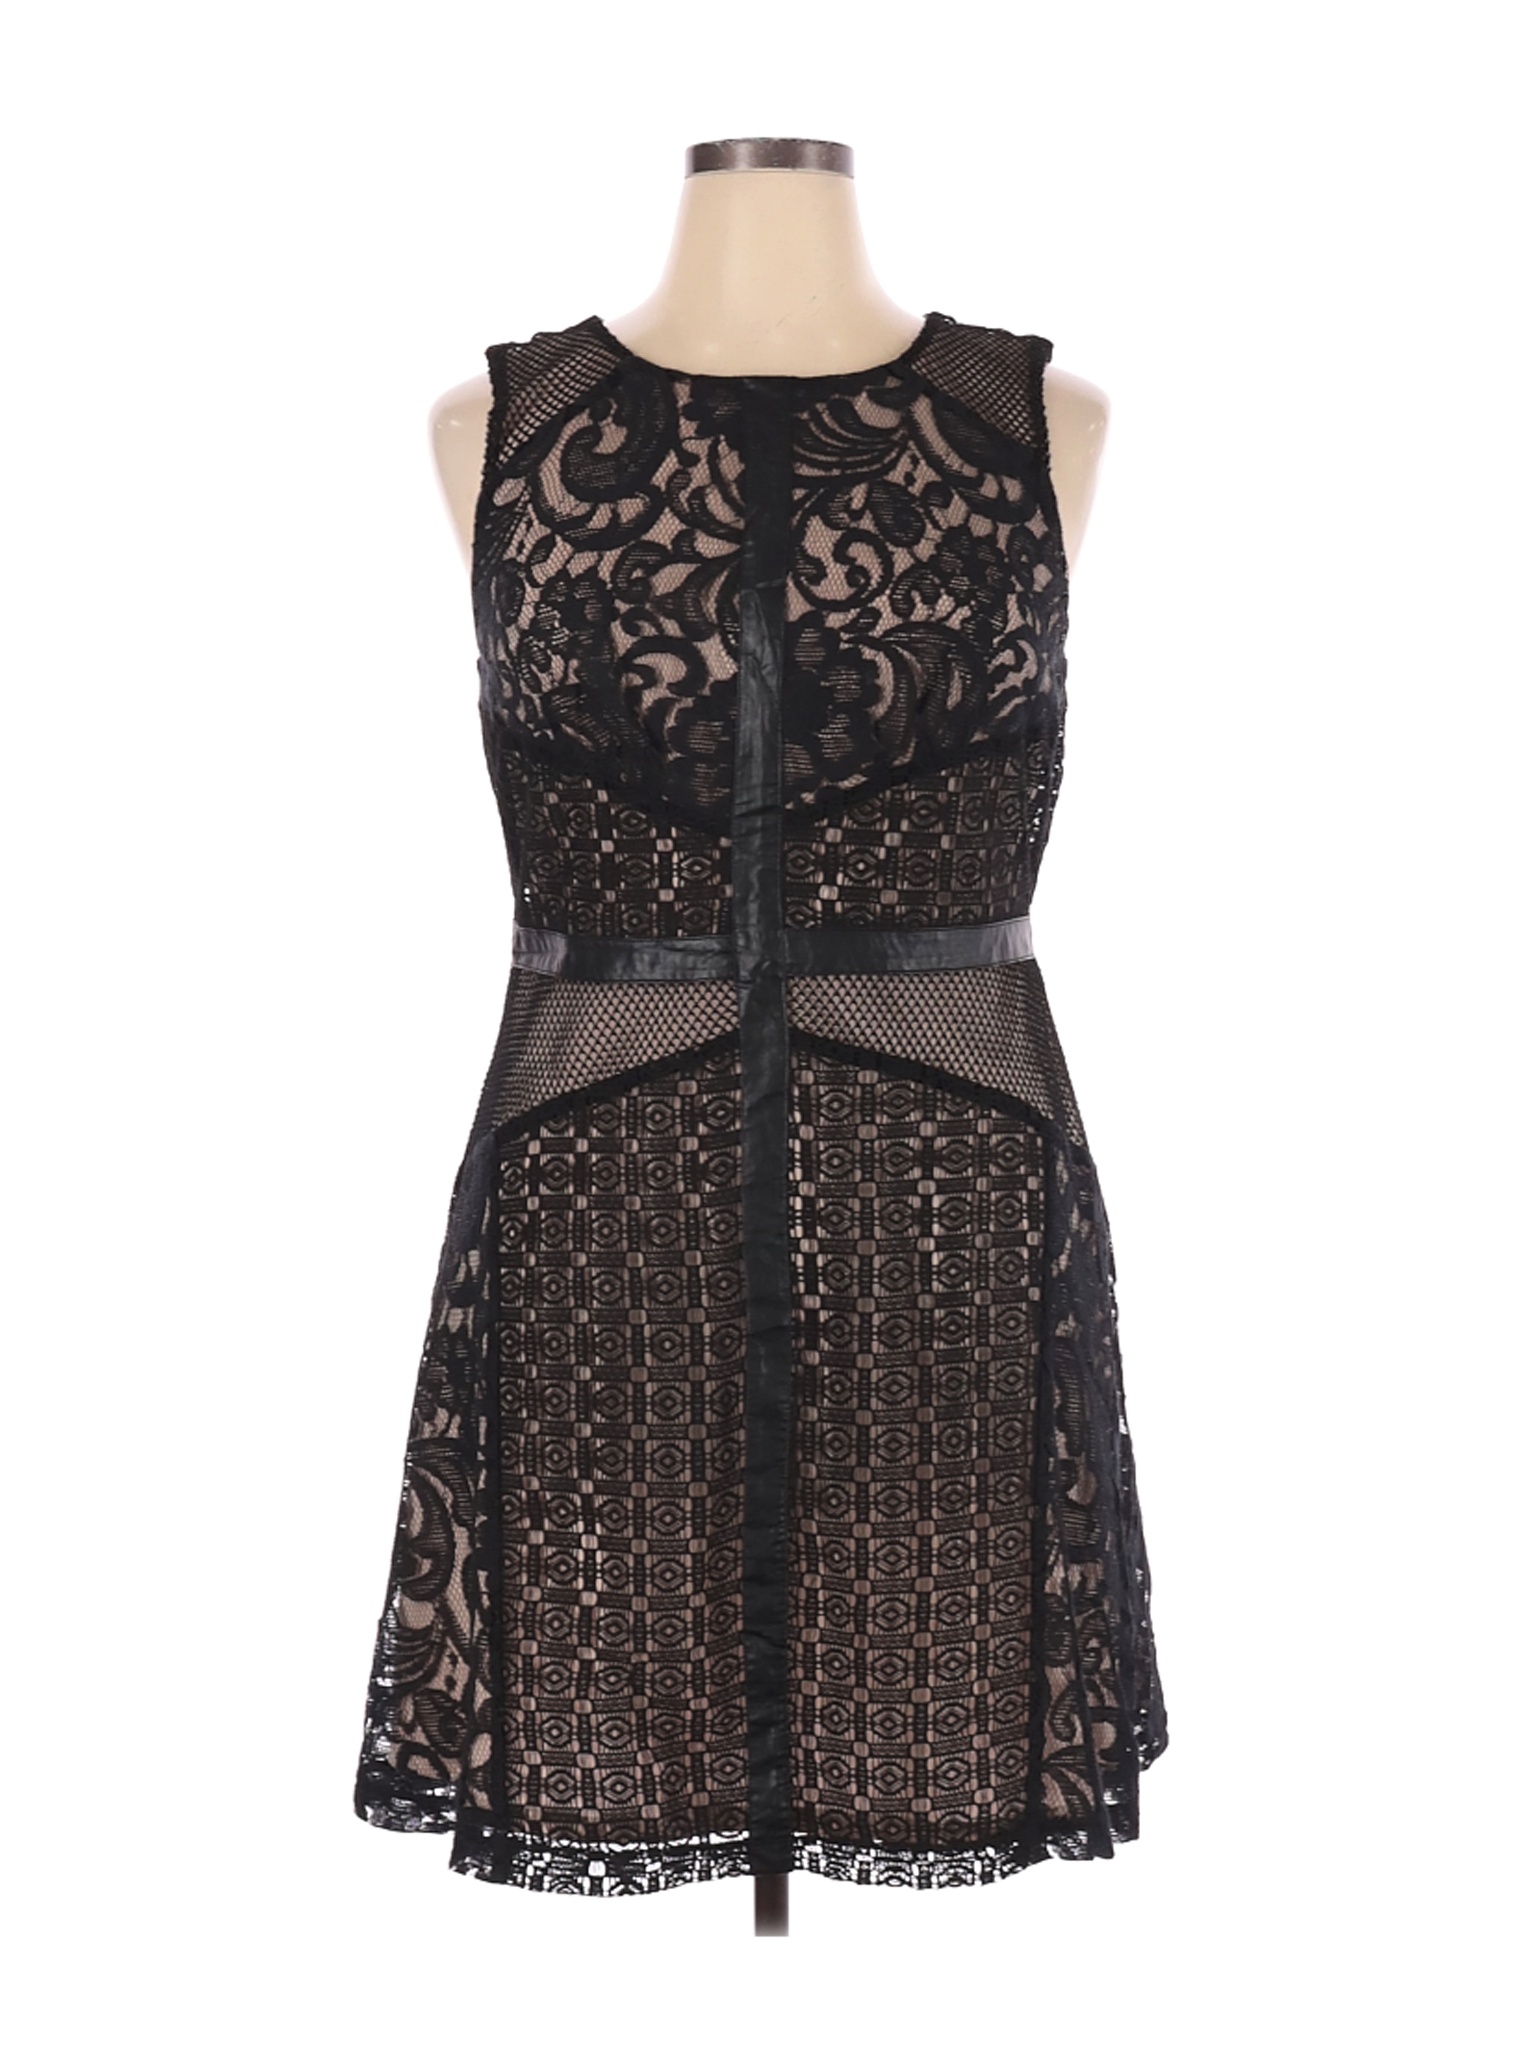 Mossimo Women Black Cocktail Dress XL | eBay